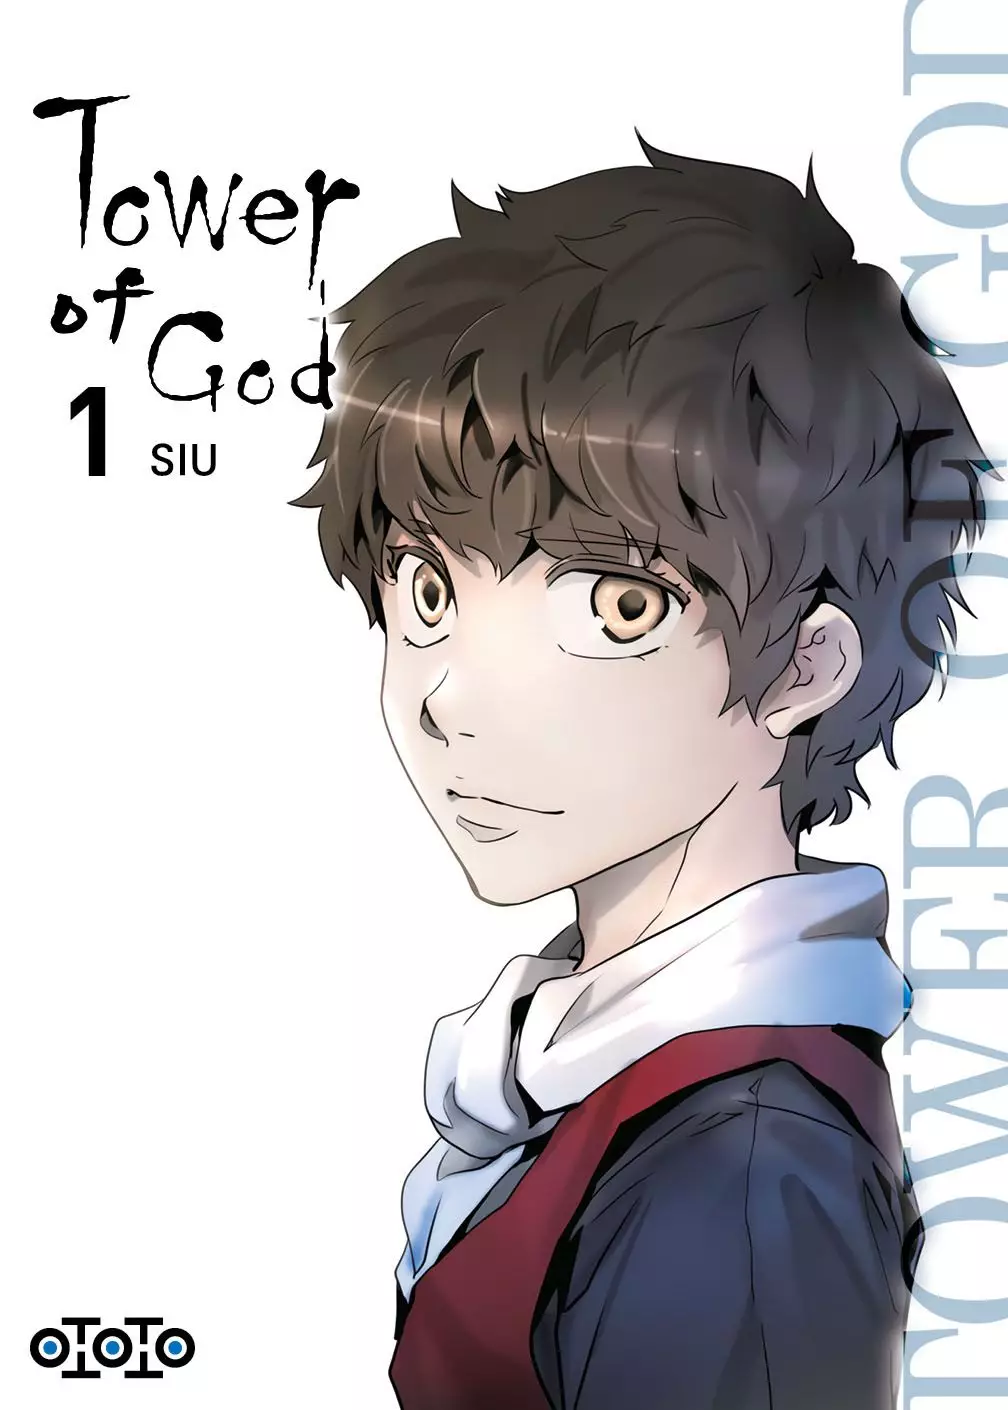 Tower Of God Chapter 551 Tower of God - Saison 1 - Manga série - Manga news